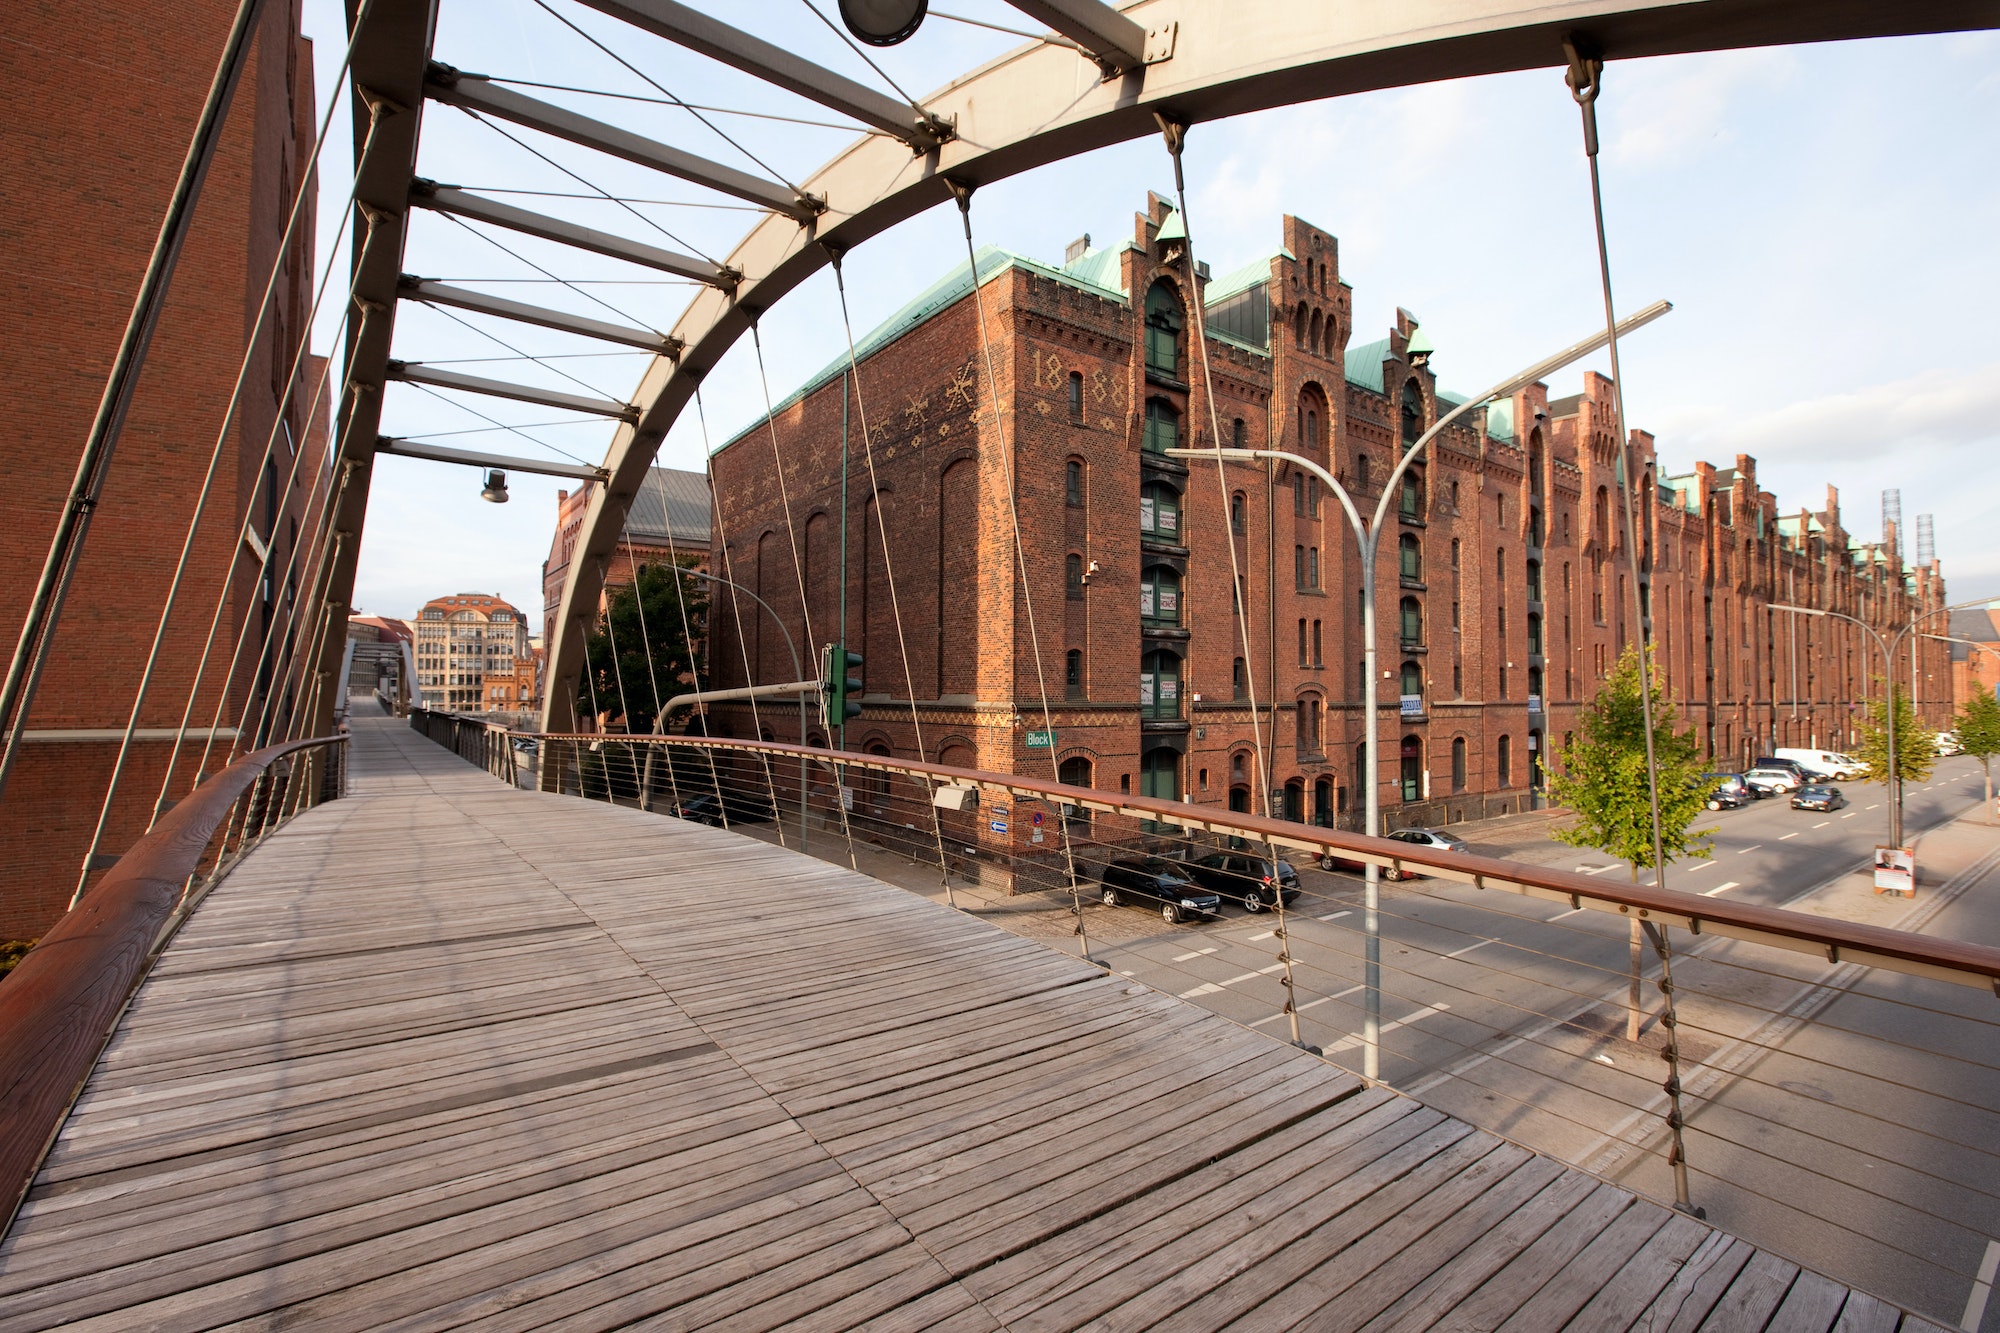 Speicherstadt, footbridge and historic warehouses, Hamburg, Germany